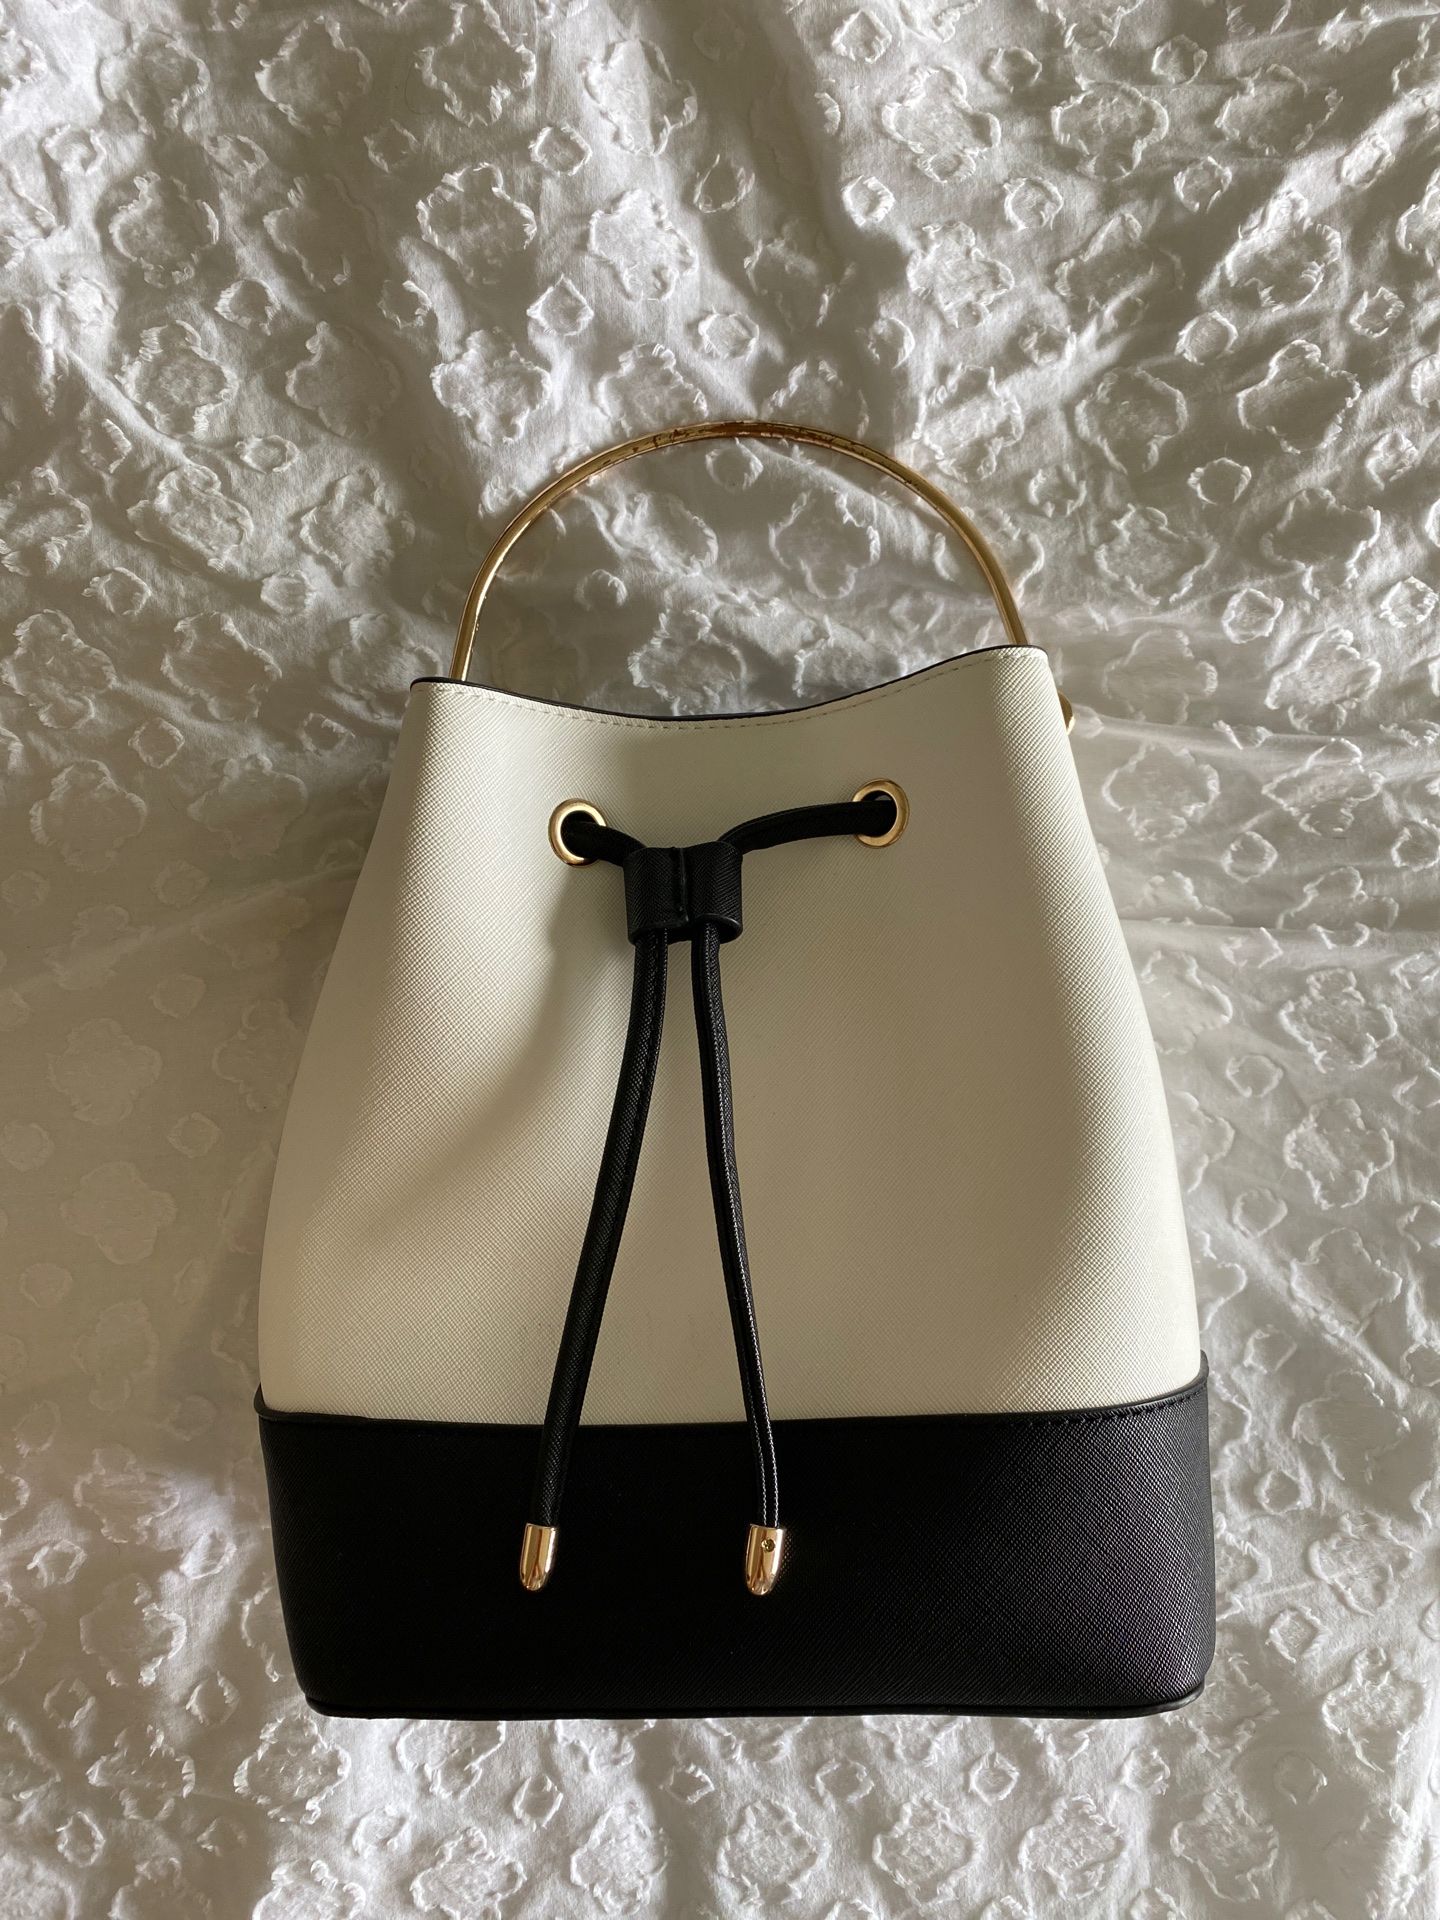 Beautiful purse (bag)